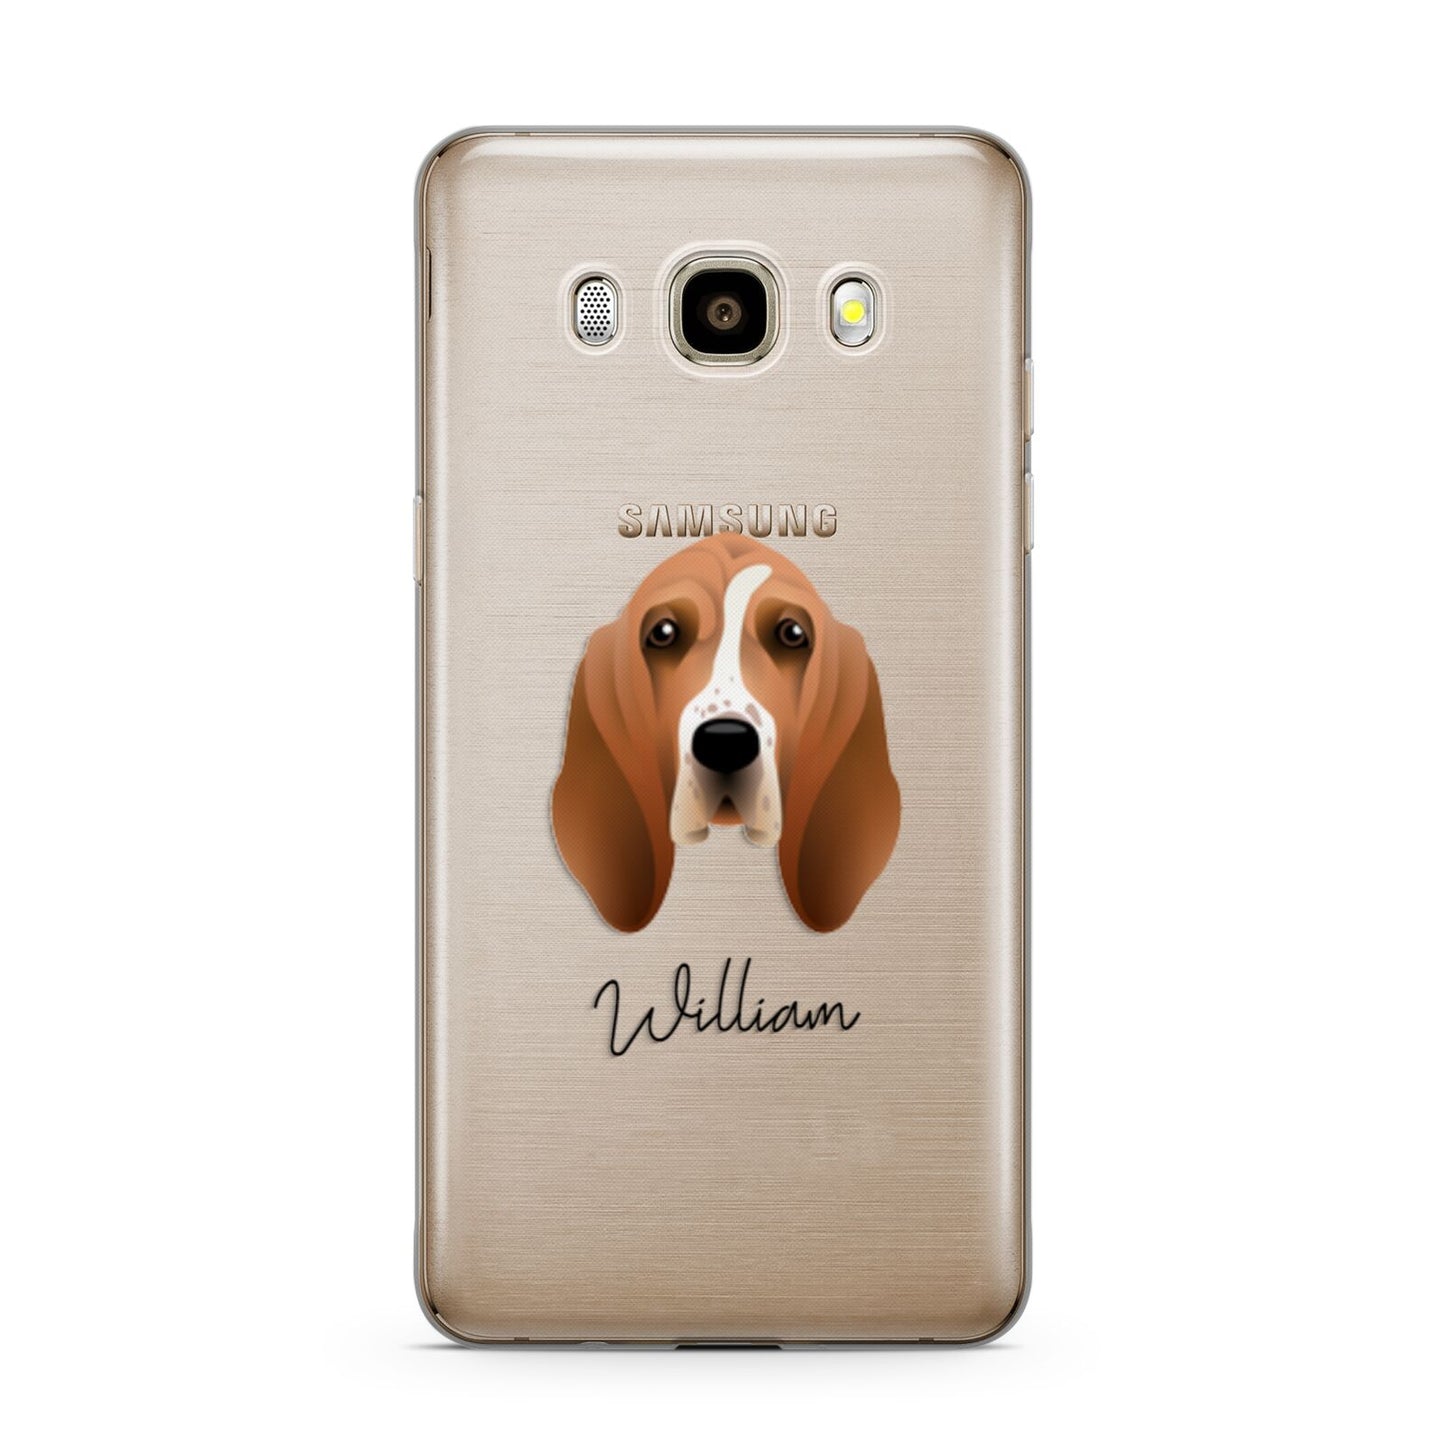 Basset Hound Personalised Samsung Galaxy J7 2016 Case on gold phone